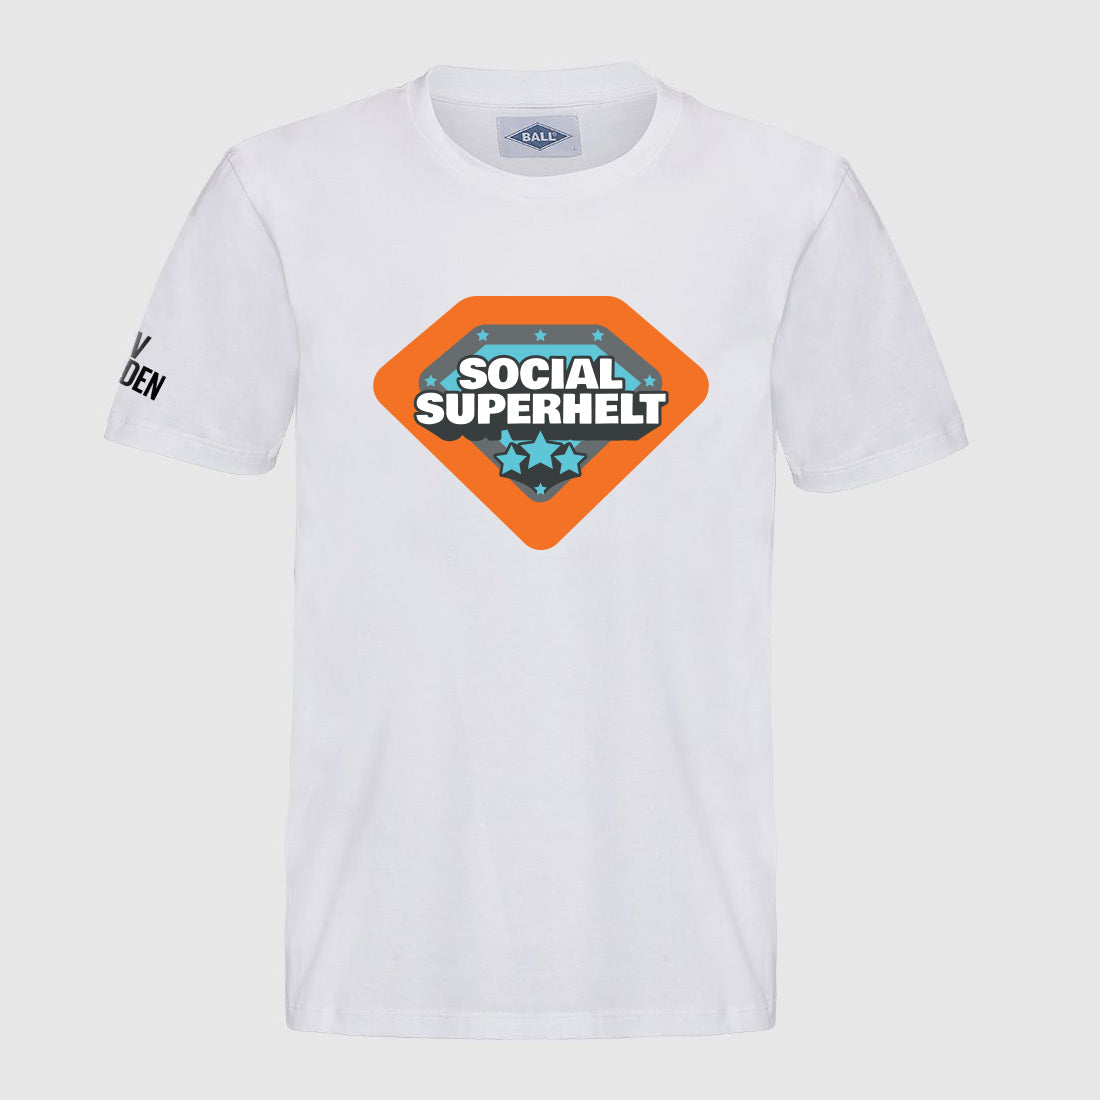 Social Superhelt t-shirt MEN